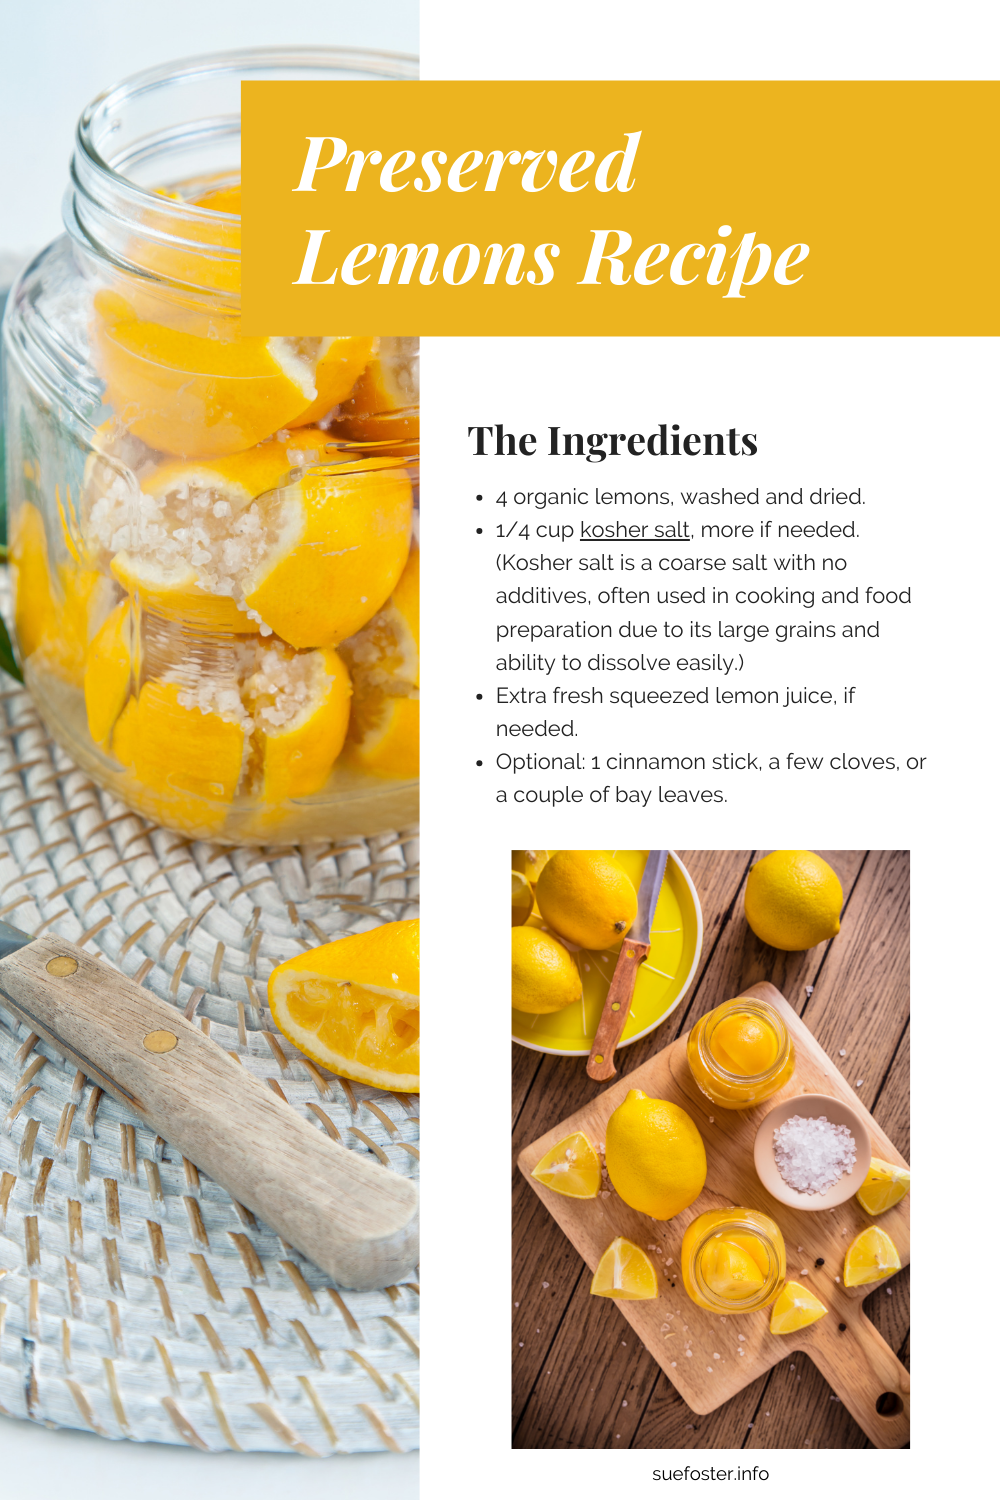 Easy-to-make preserved lemons recipe with organic lemons, kosher salt, and optional spices.